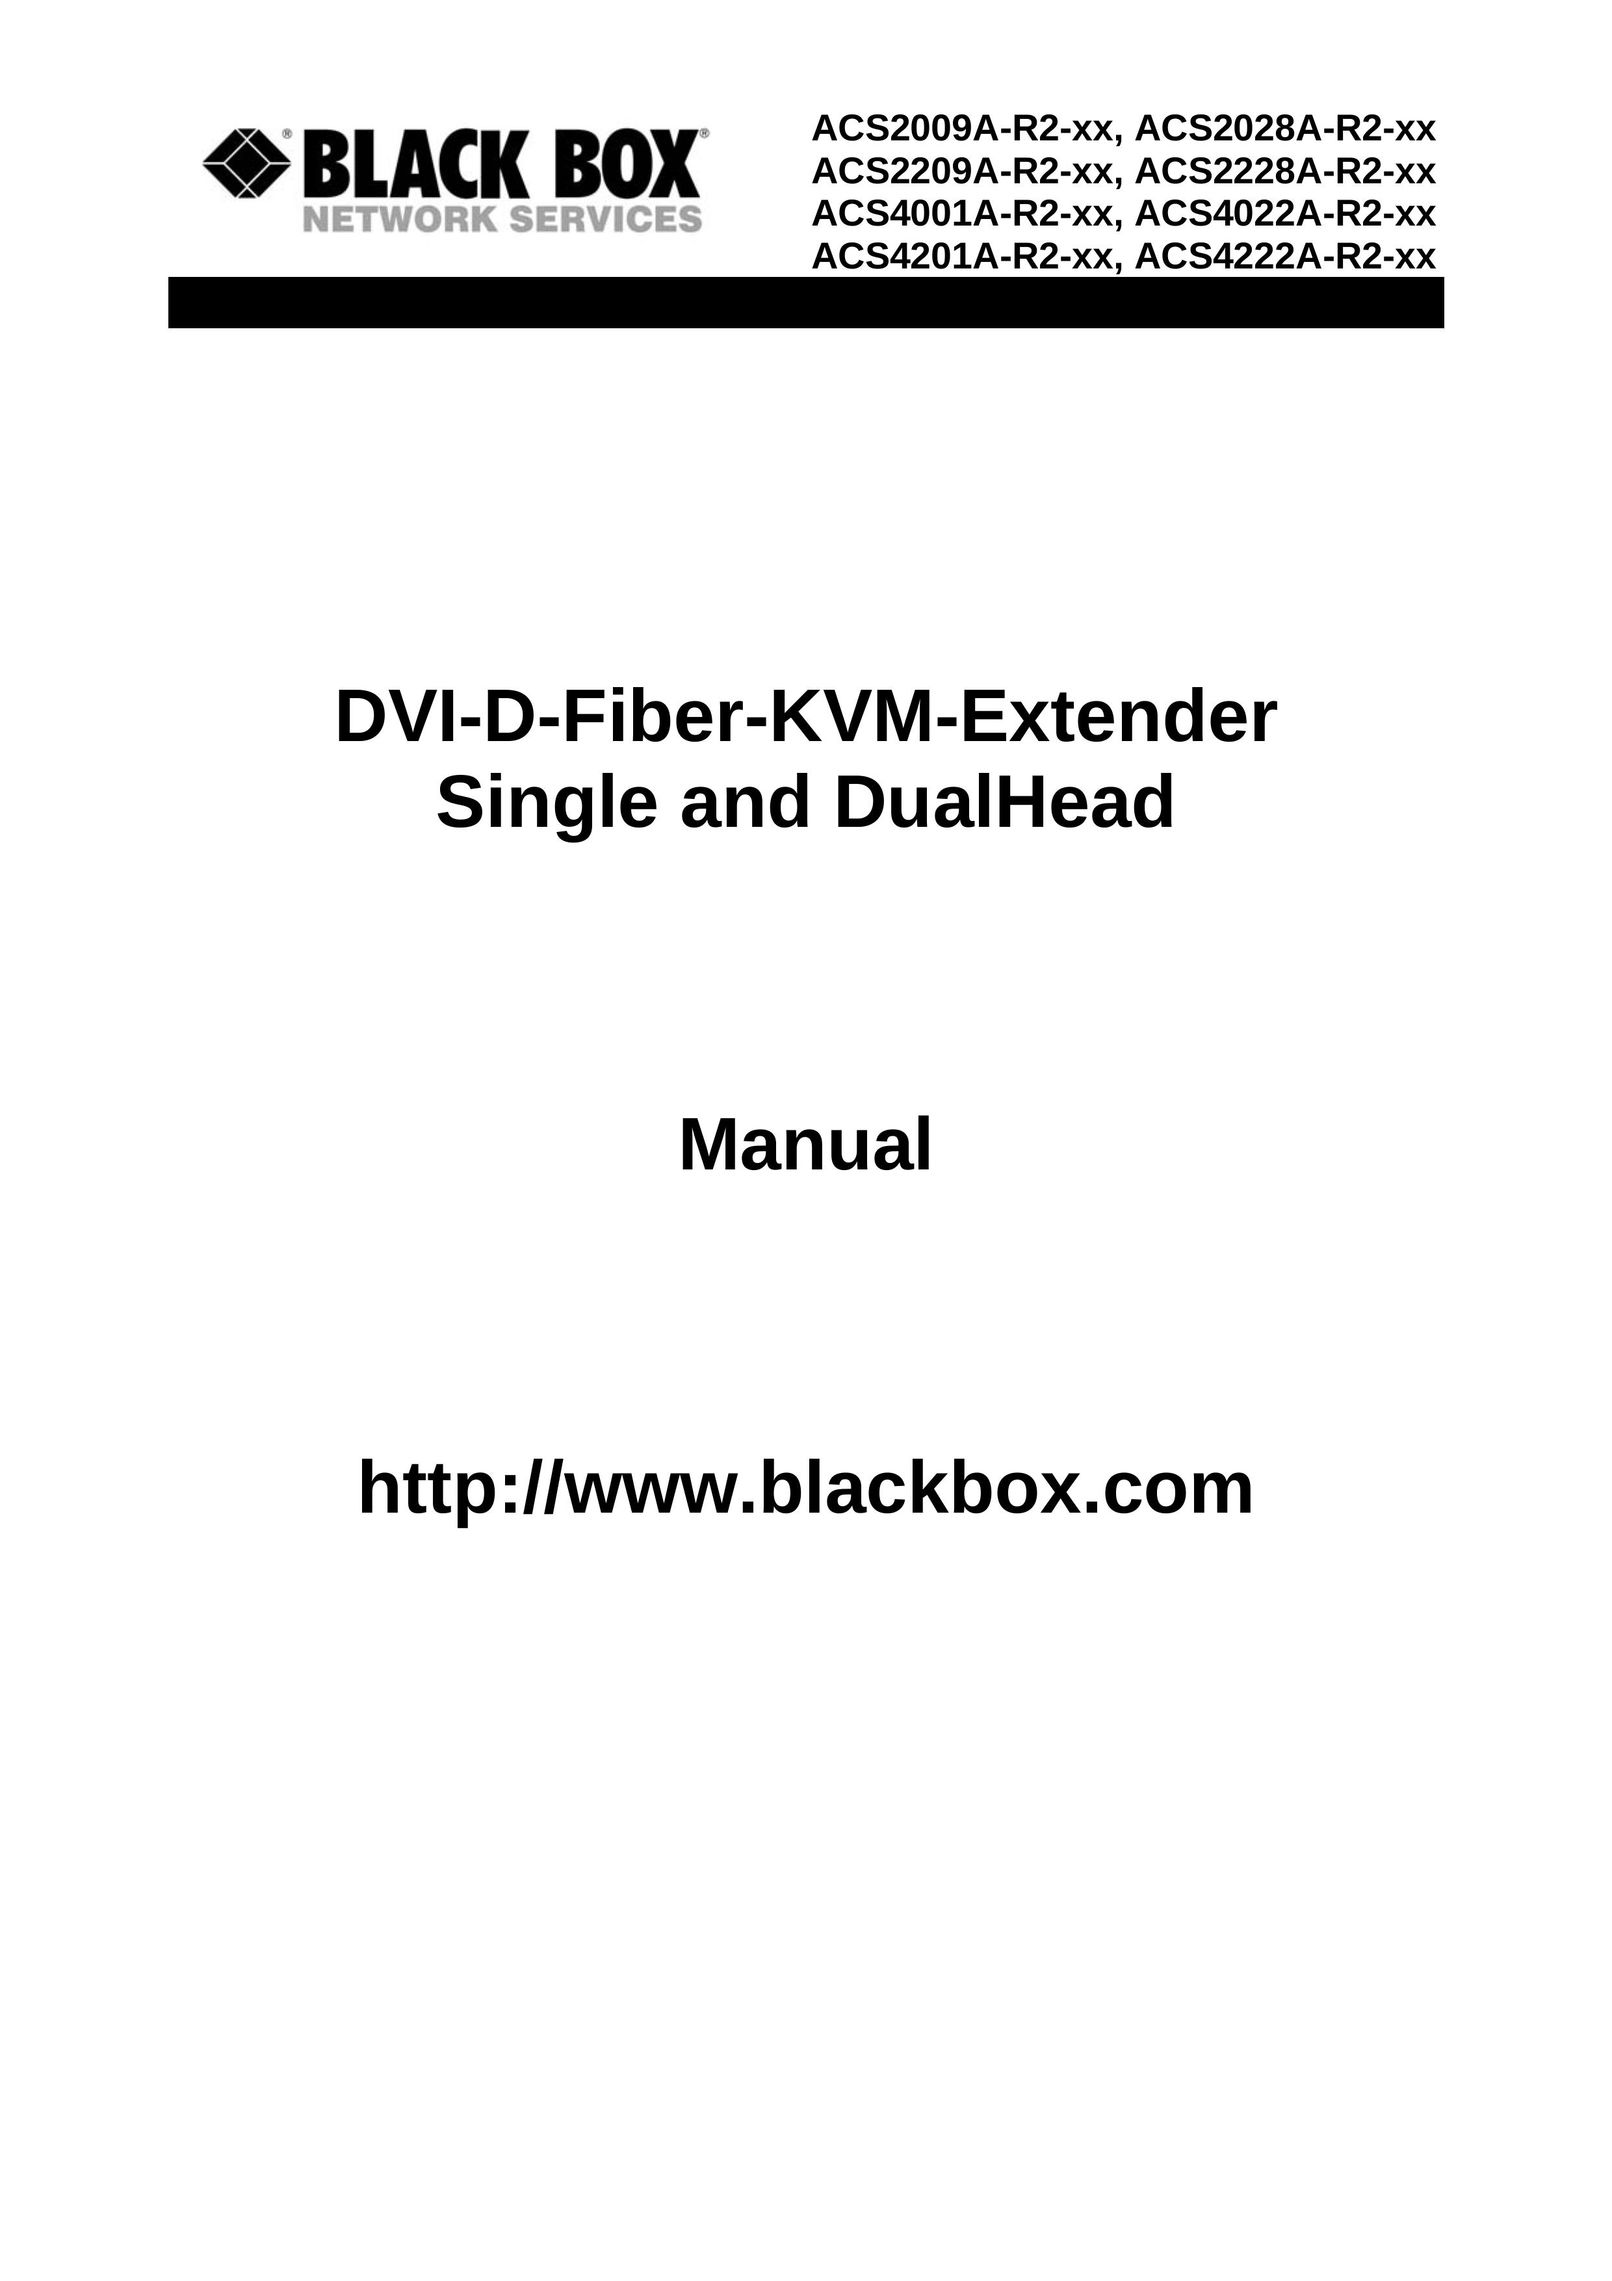 Black Box ACS2009A-R2-xx Network Hardware User Manual